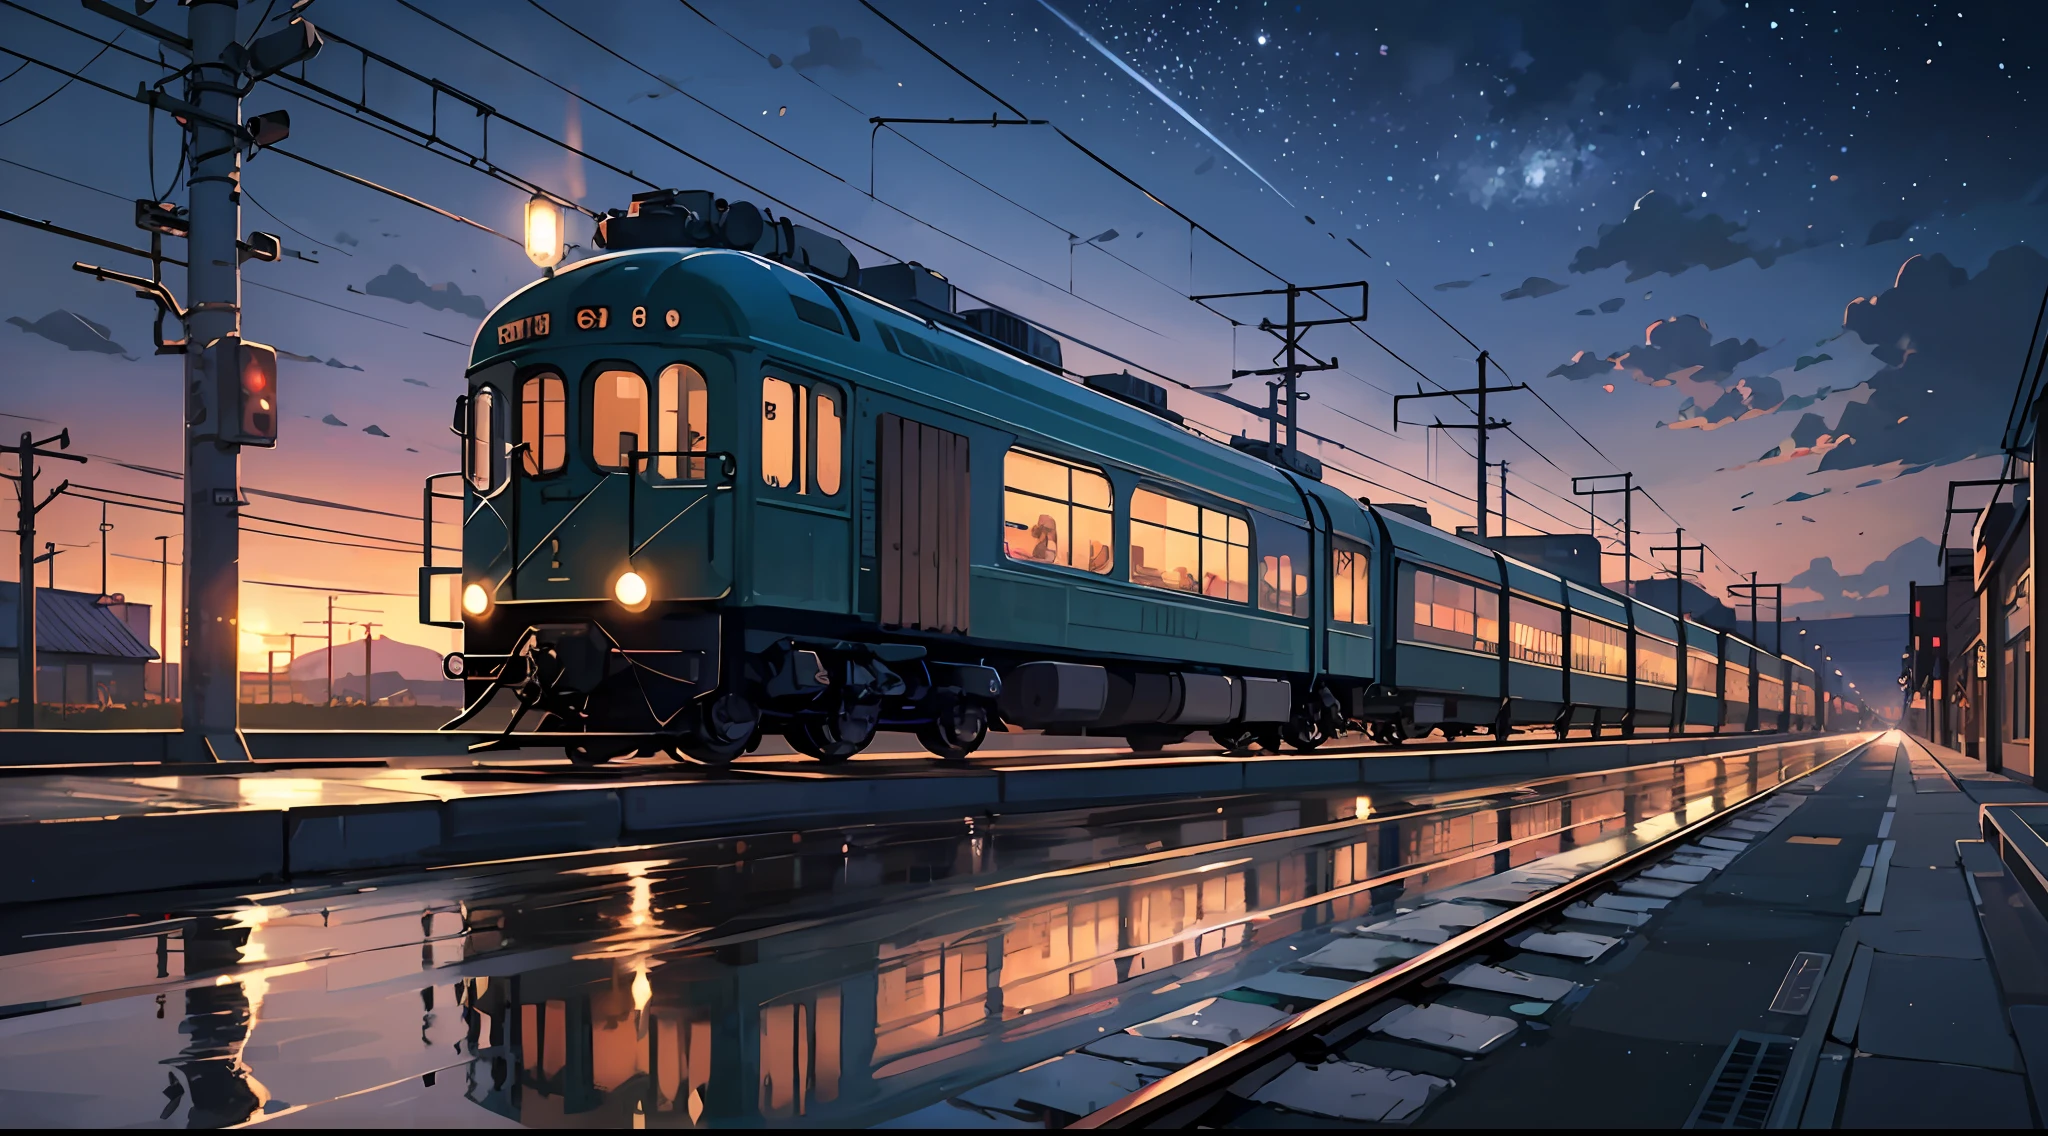 Anime Girls Train Wallpaper - Resolution:2362x1294 - ID:1271532 - wallha.com